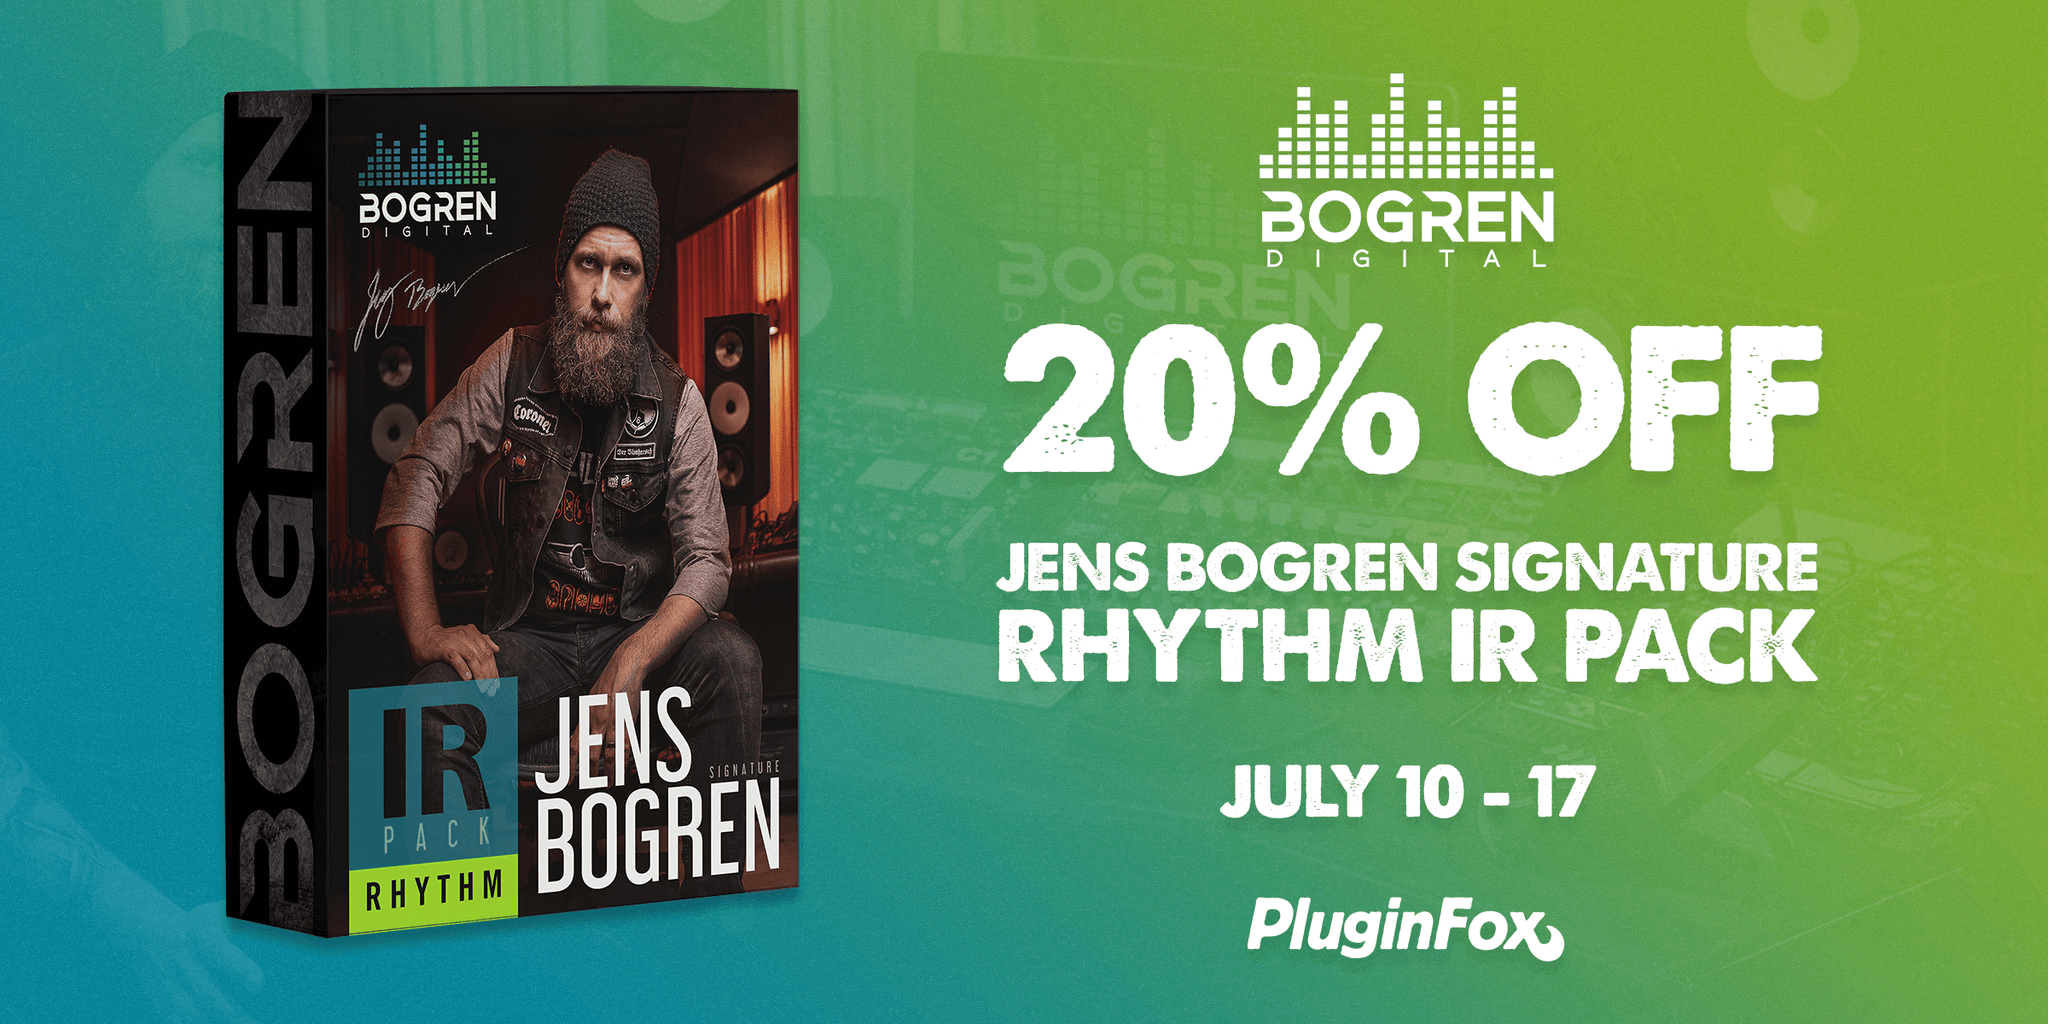 Bogren Digital Intro Sale - July 10-17